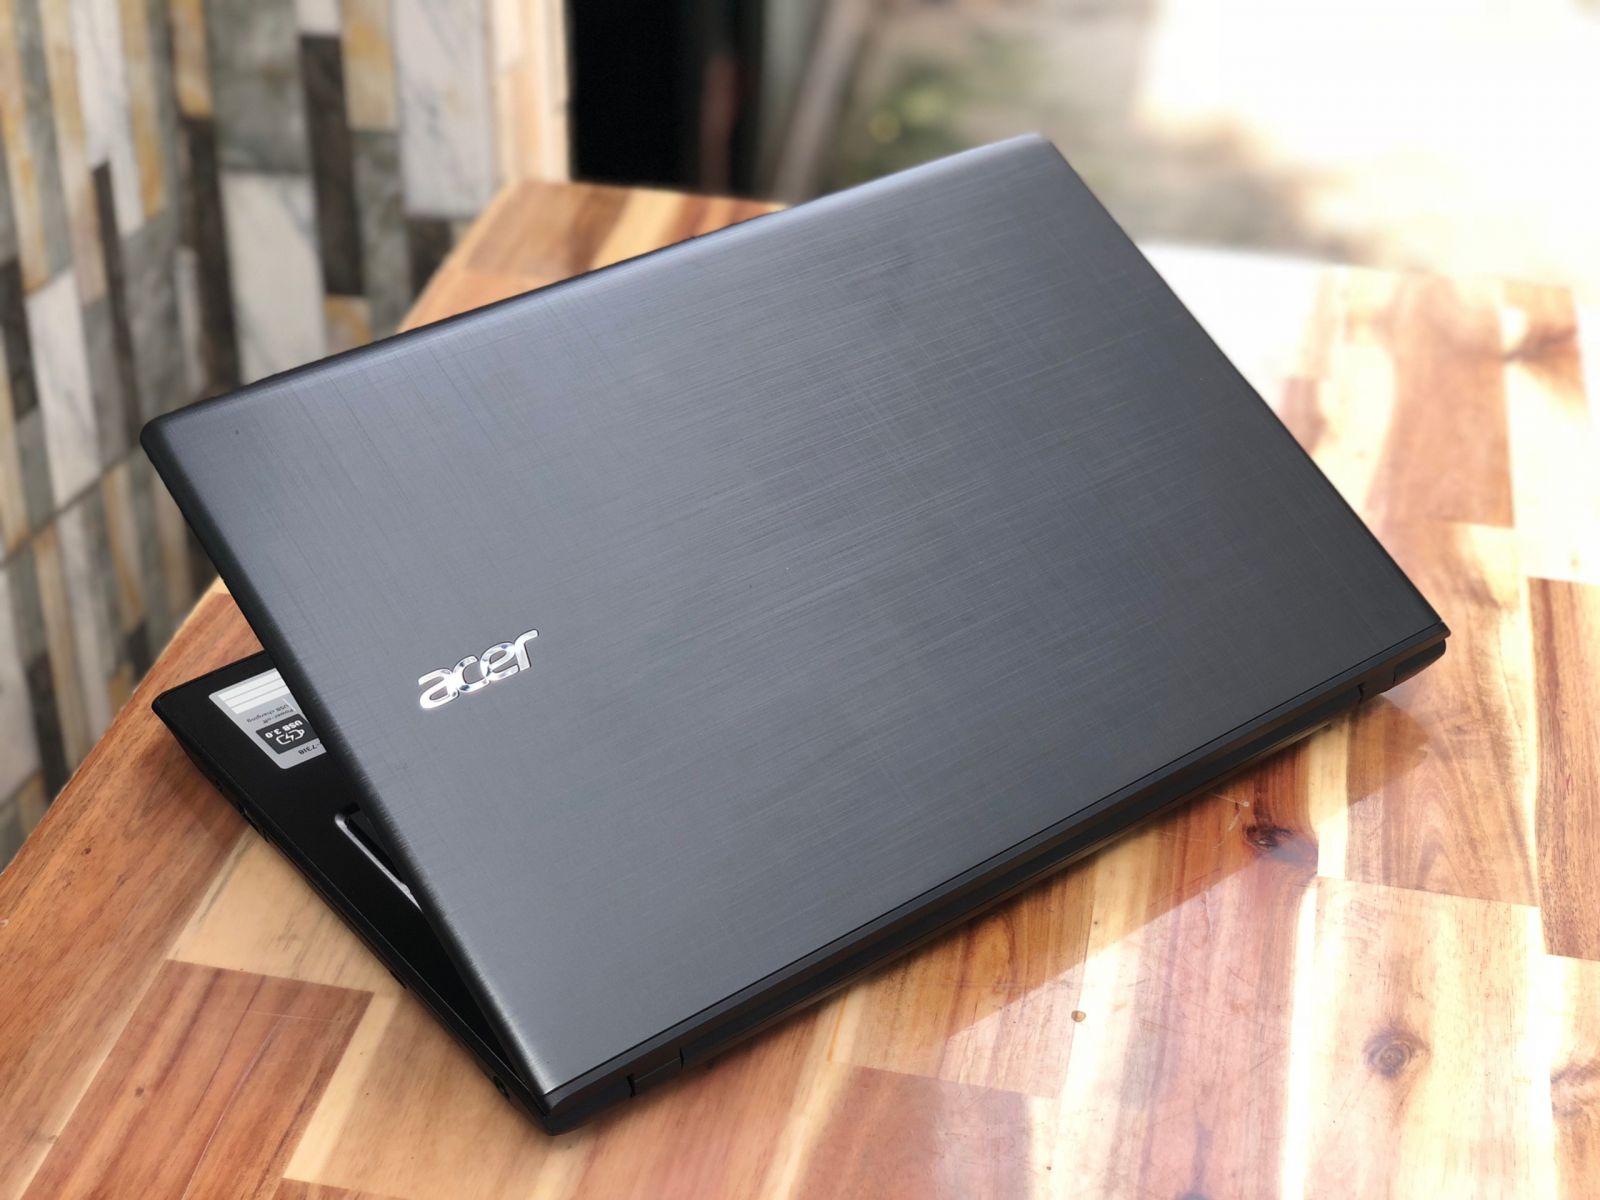 Laptop Acer E5-575G-39QW, i3 7100U 4G 500G Vga GT940MX Full HD Like new zin 100% Giá rẻ